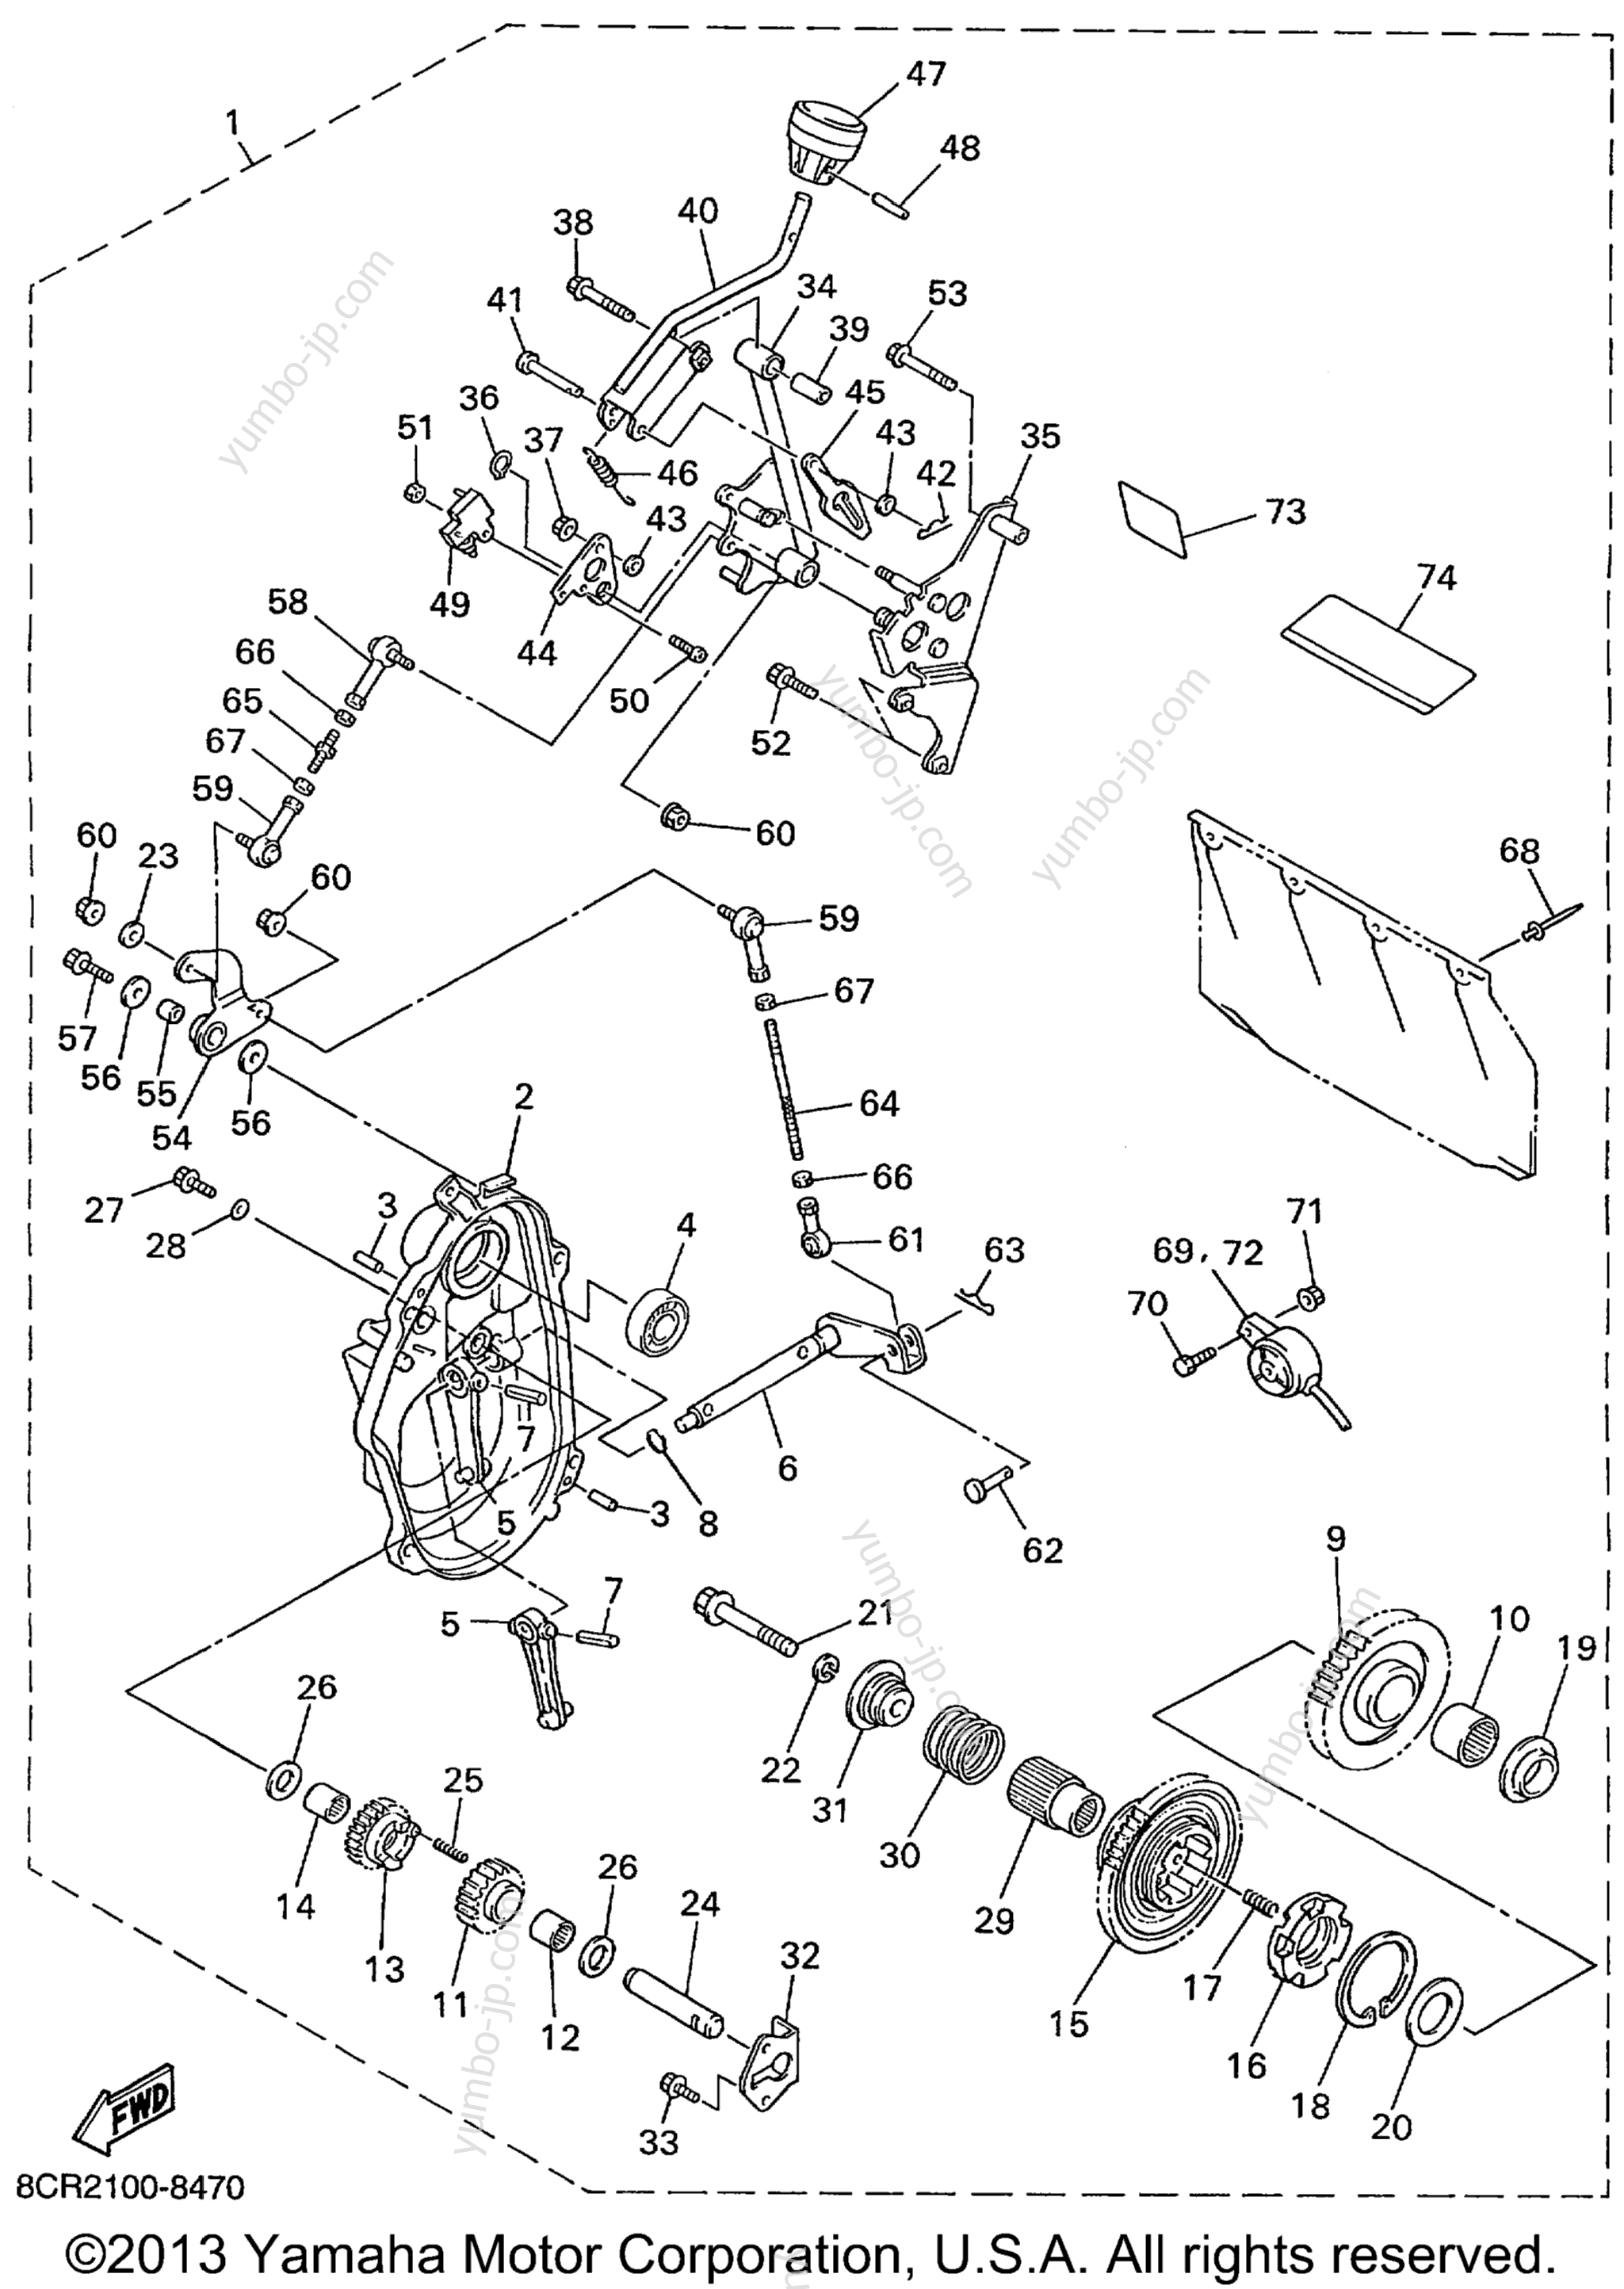 Alternate Reverse Gear Kit for snowmobiles YAMAHA MOUNTAIN MAX 700 (MM700G) 2002 year